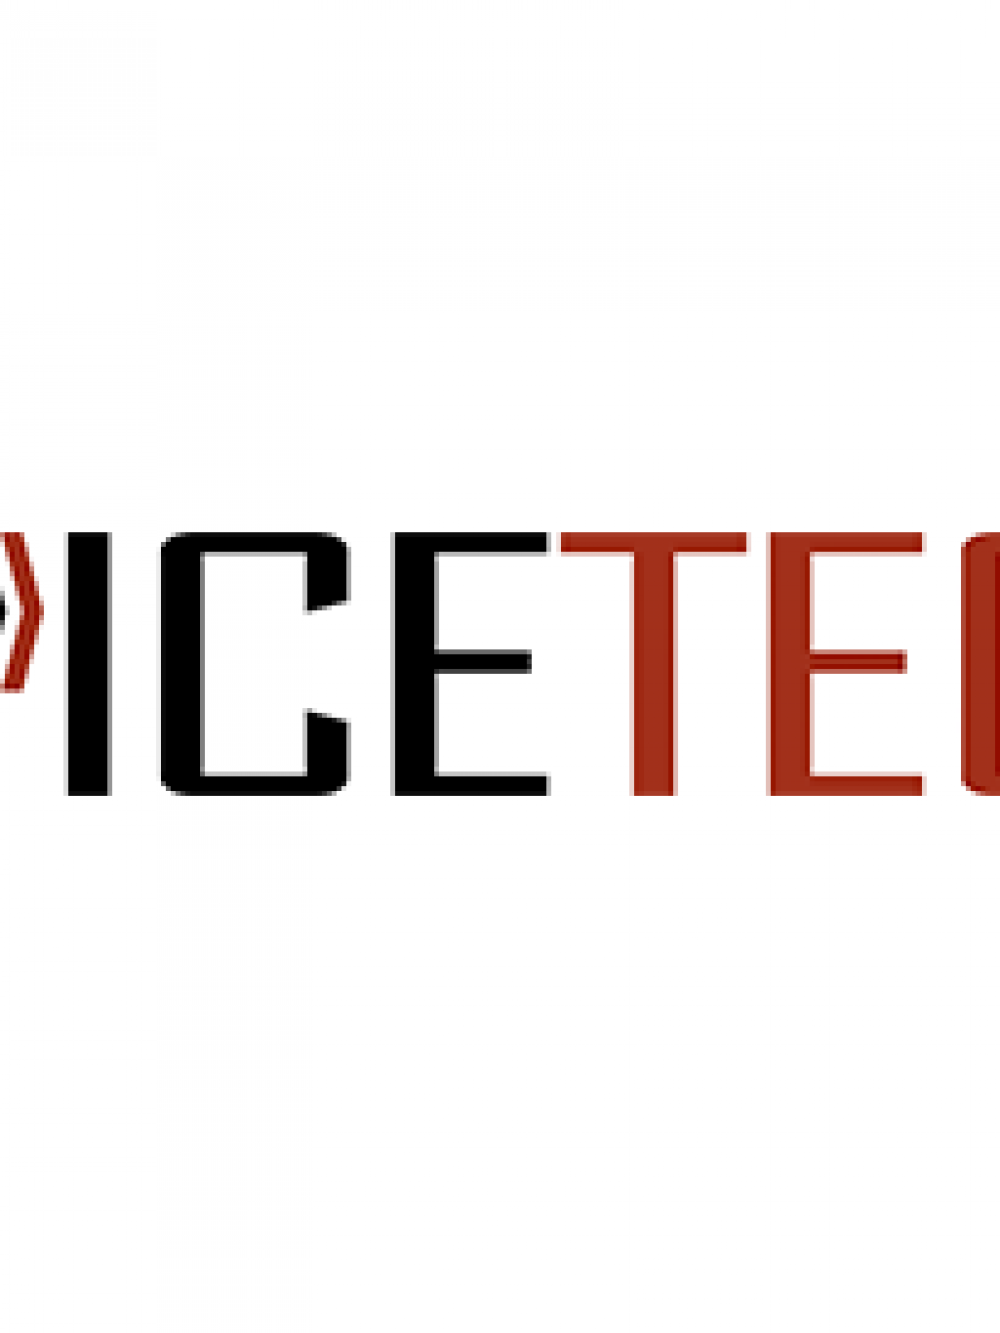 logo-Spicetech